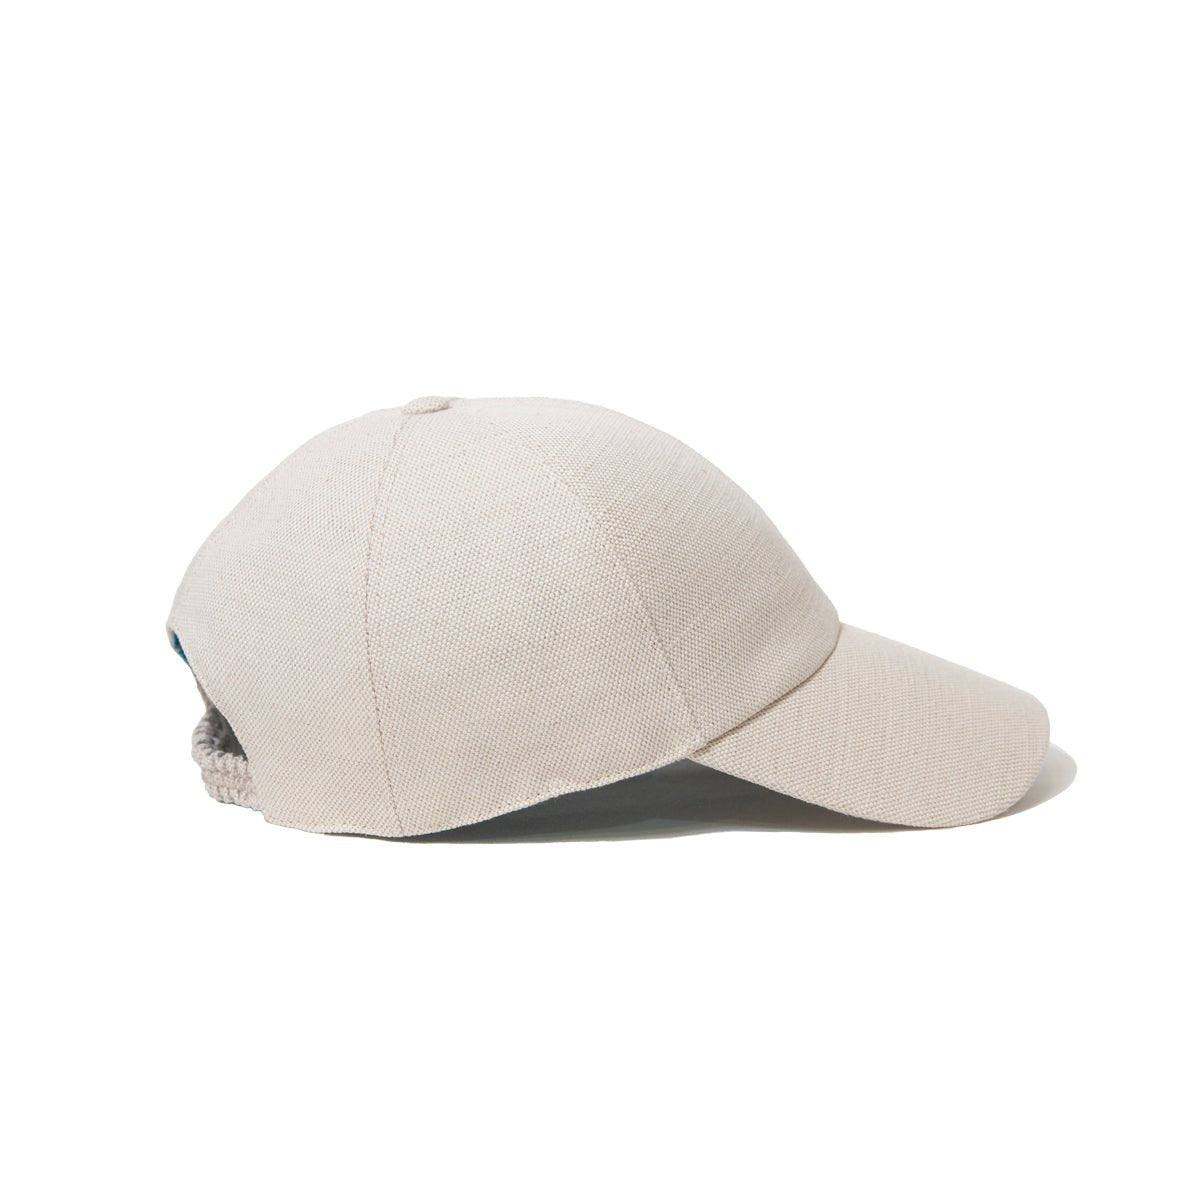 Baseball Hat White - Baseball - KAMPOS